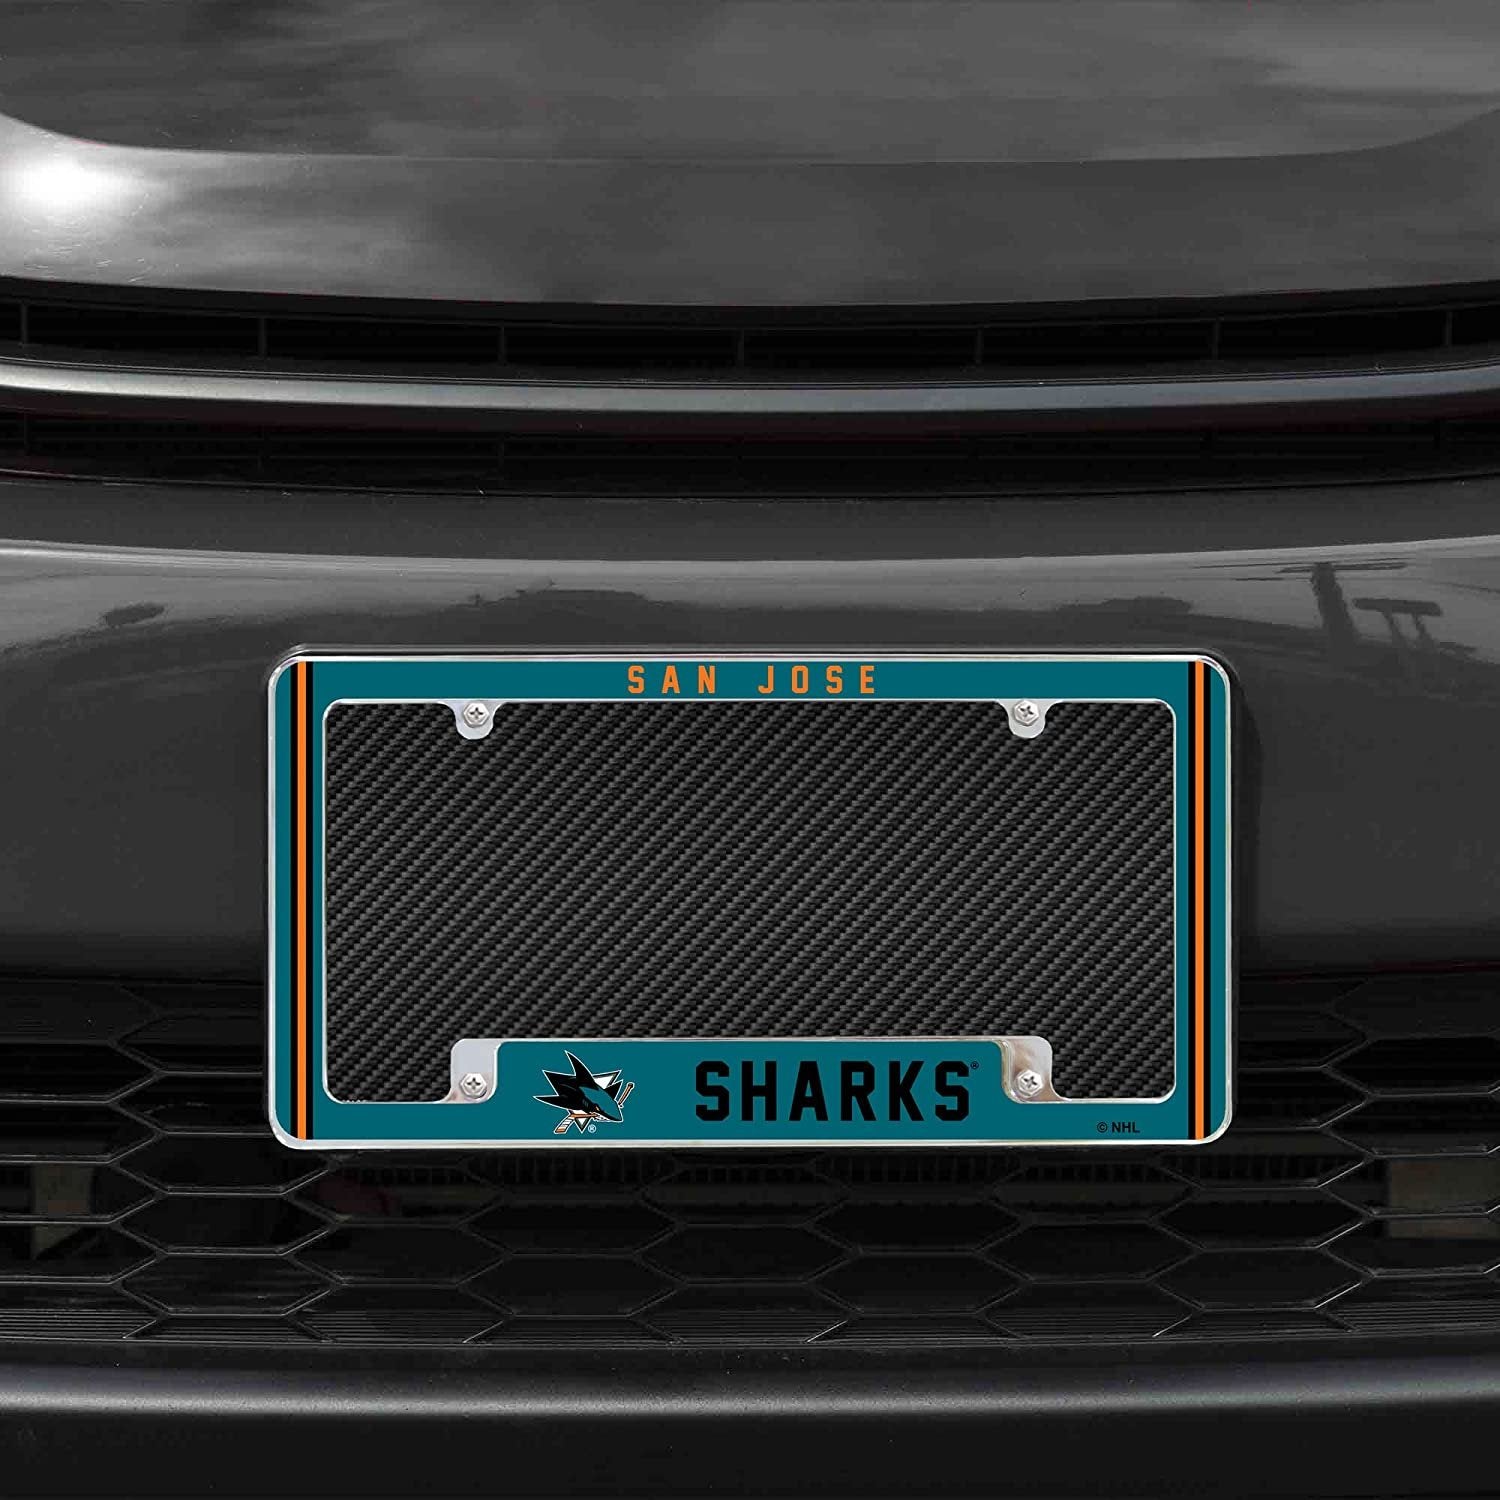 San Jose Sharks Metal License Plate Frame Chrome Tag Cover Alternate Design 6x12 Inch